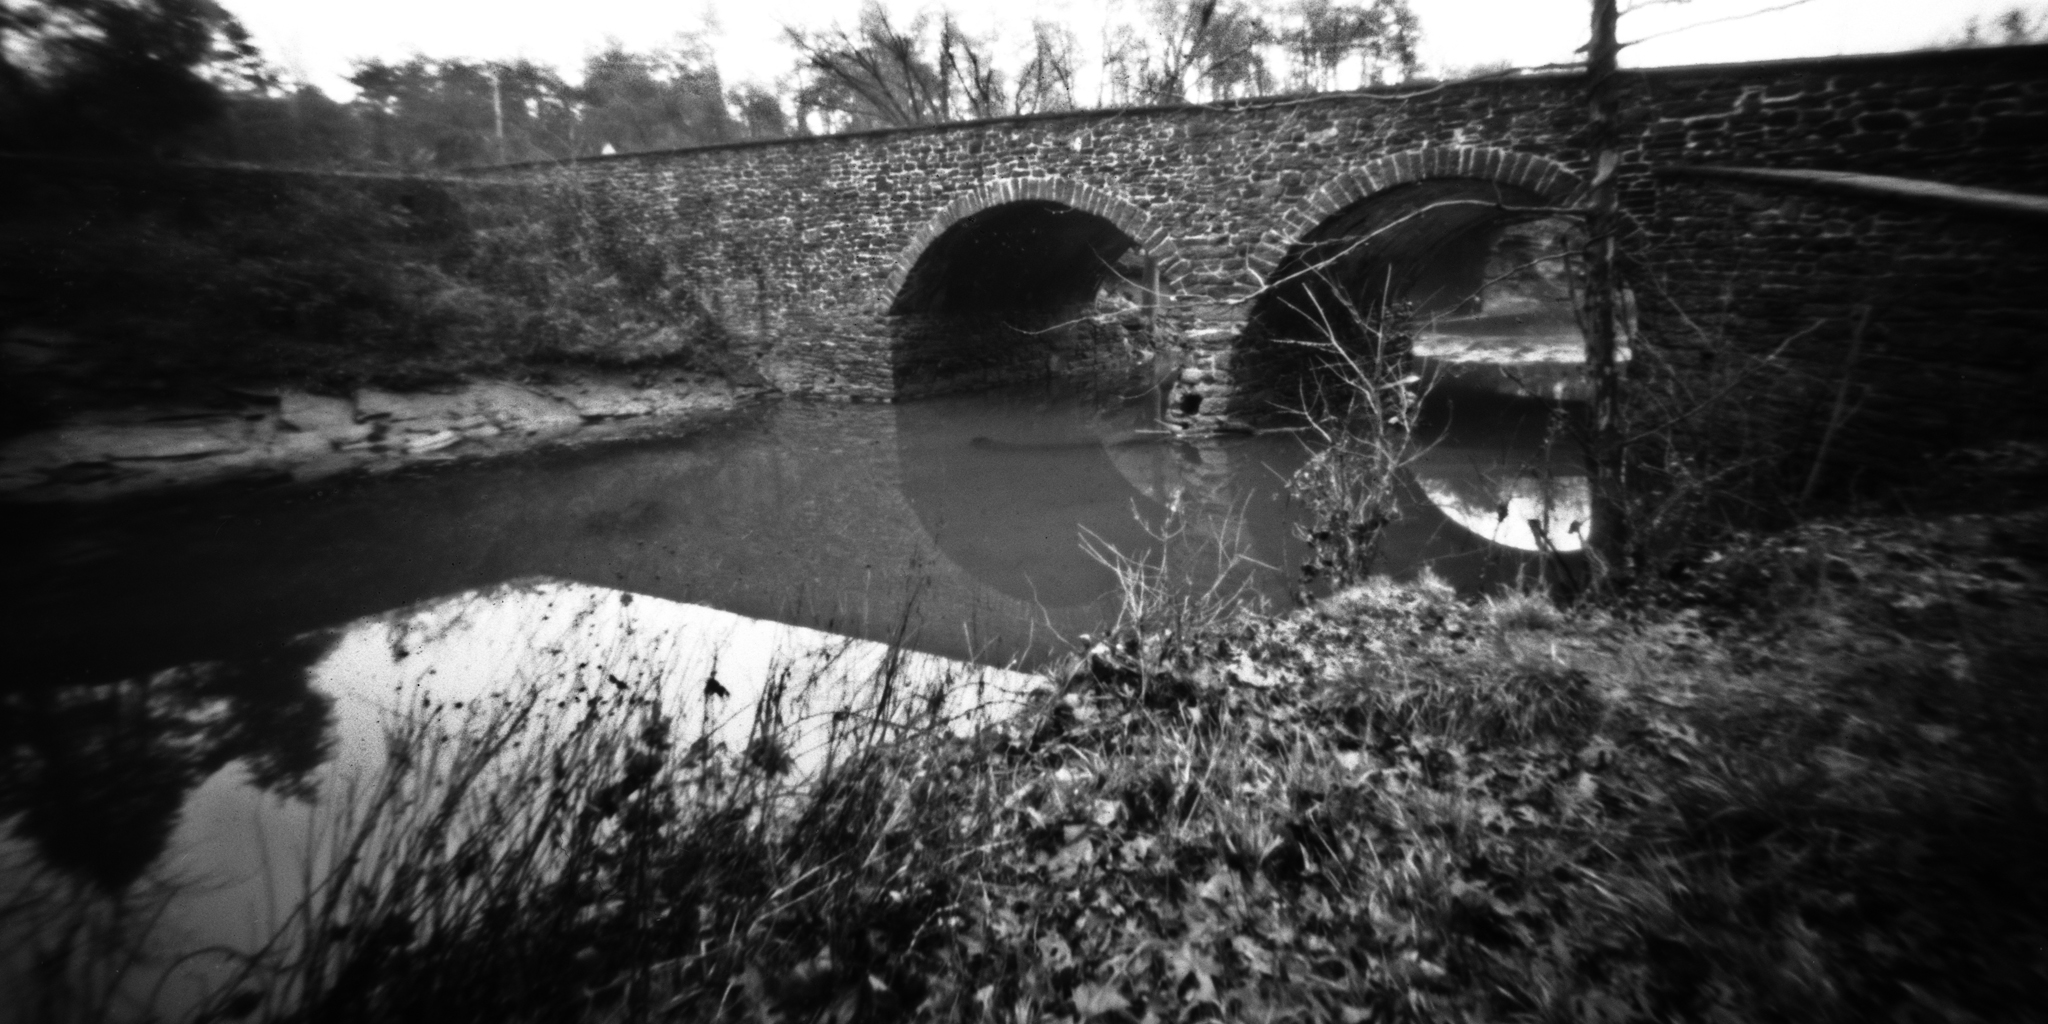  Stone bridge over Bull Run on the Manassas National Battlefield.&nbsp; Manassas, Virginia.&nbsp; Santa Barbara Pinhole Co 75mm 4x5. 